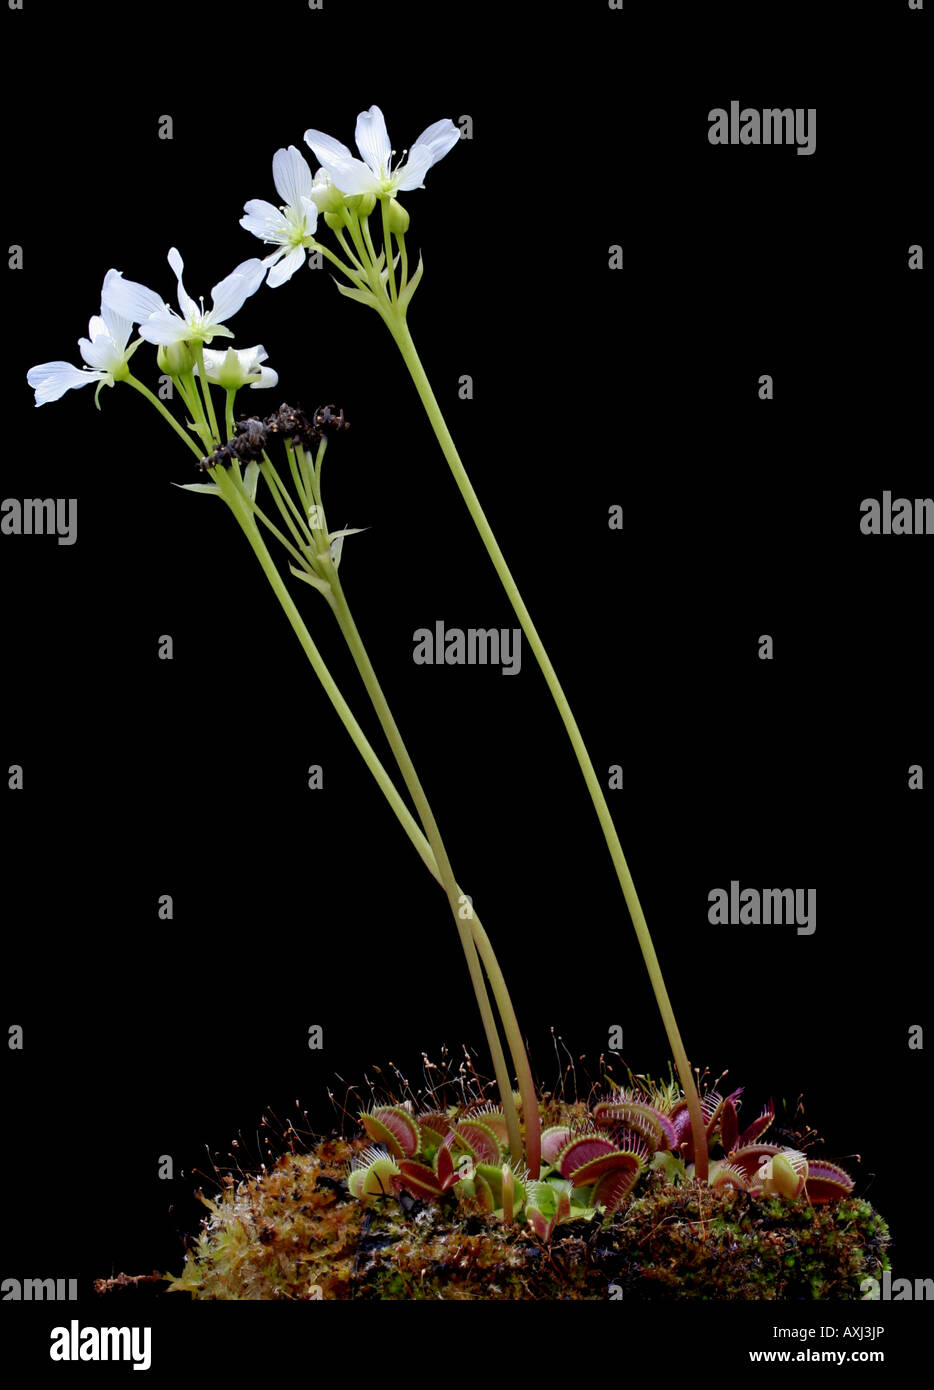 Venus flytrap, Dionaea muscipula, in flower Stock Photo